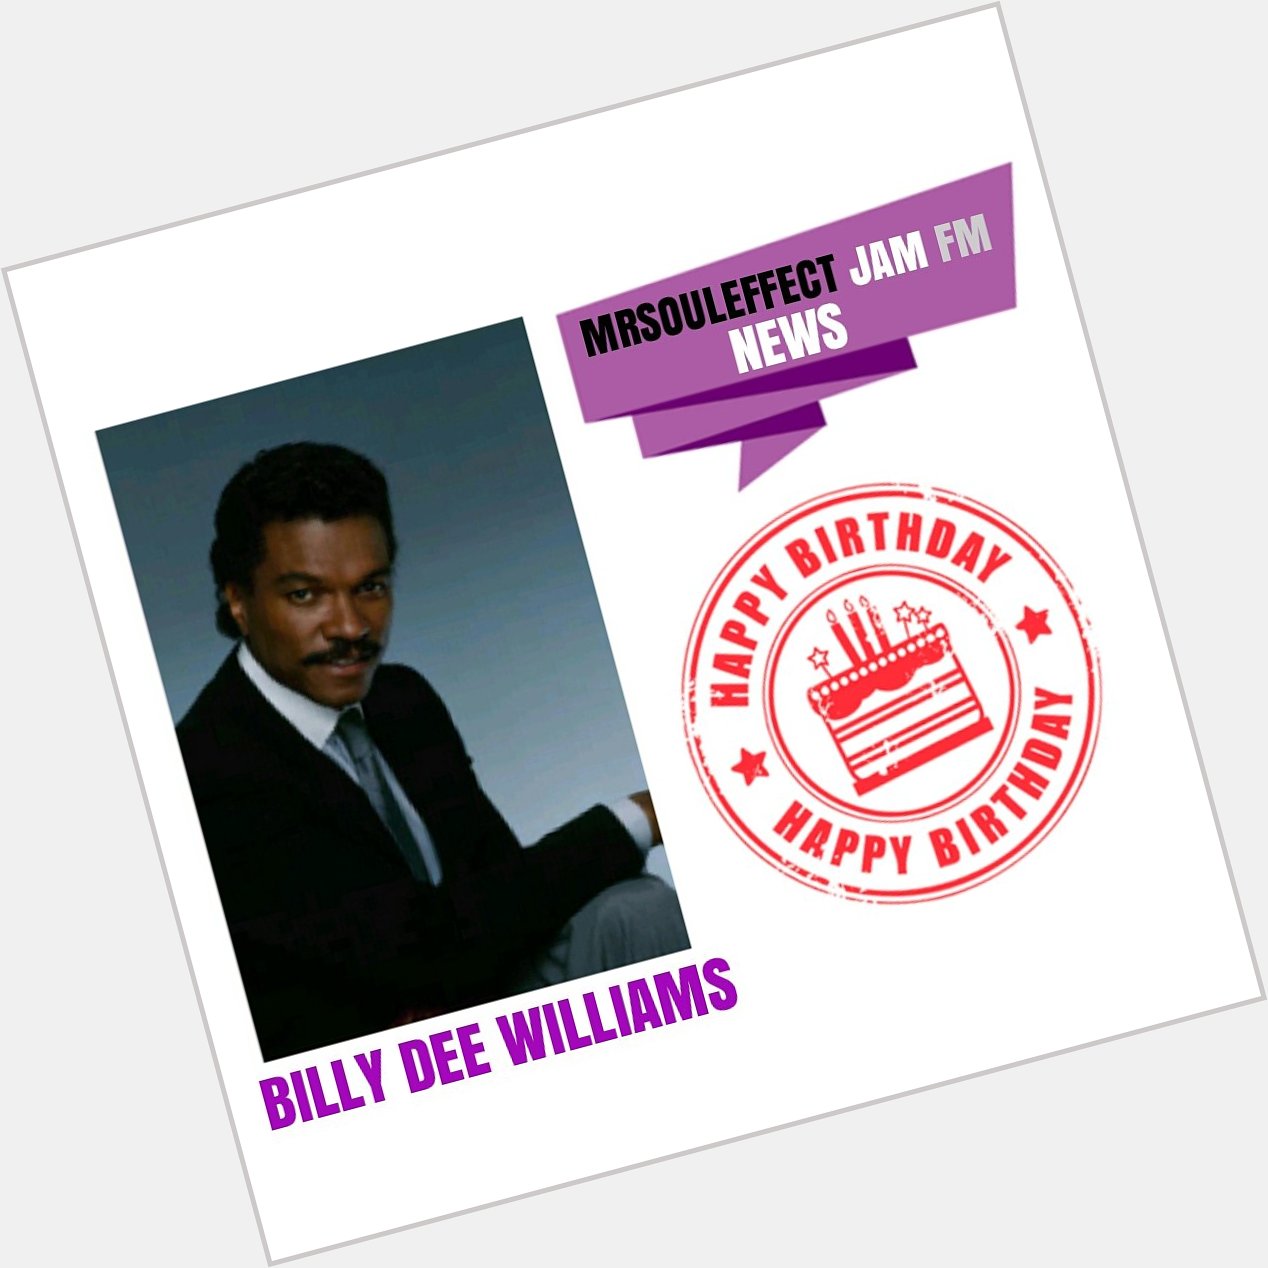 Happy birthday to Billy Dee Williams 